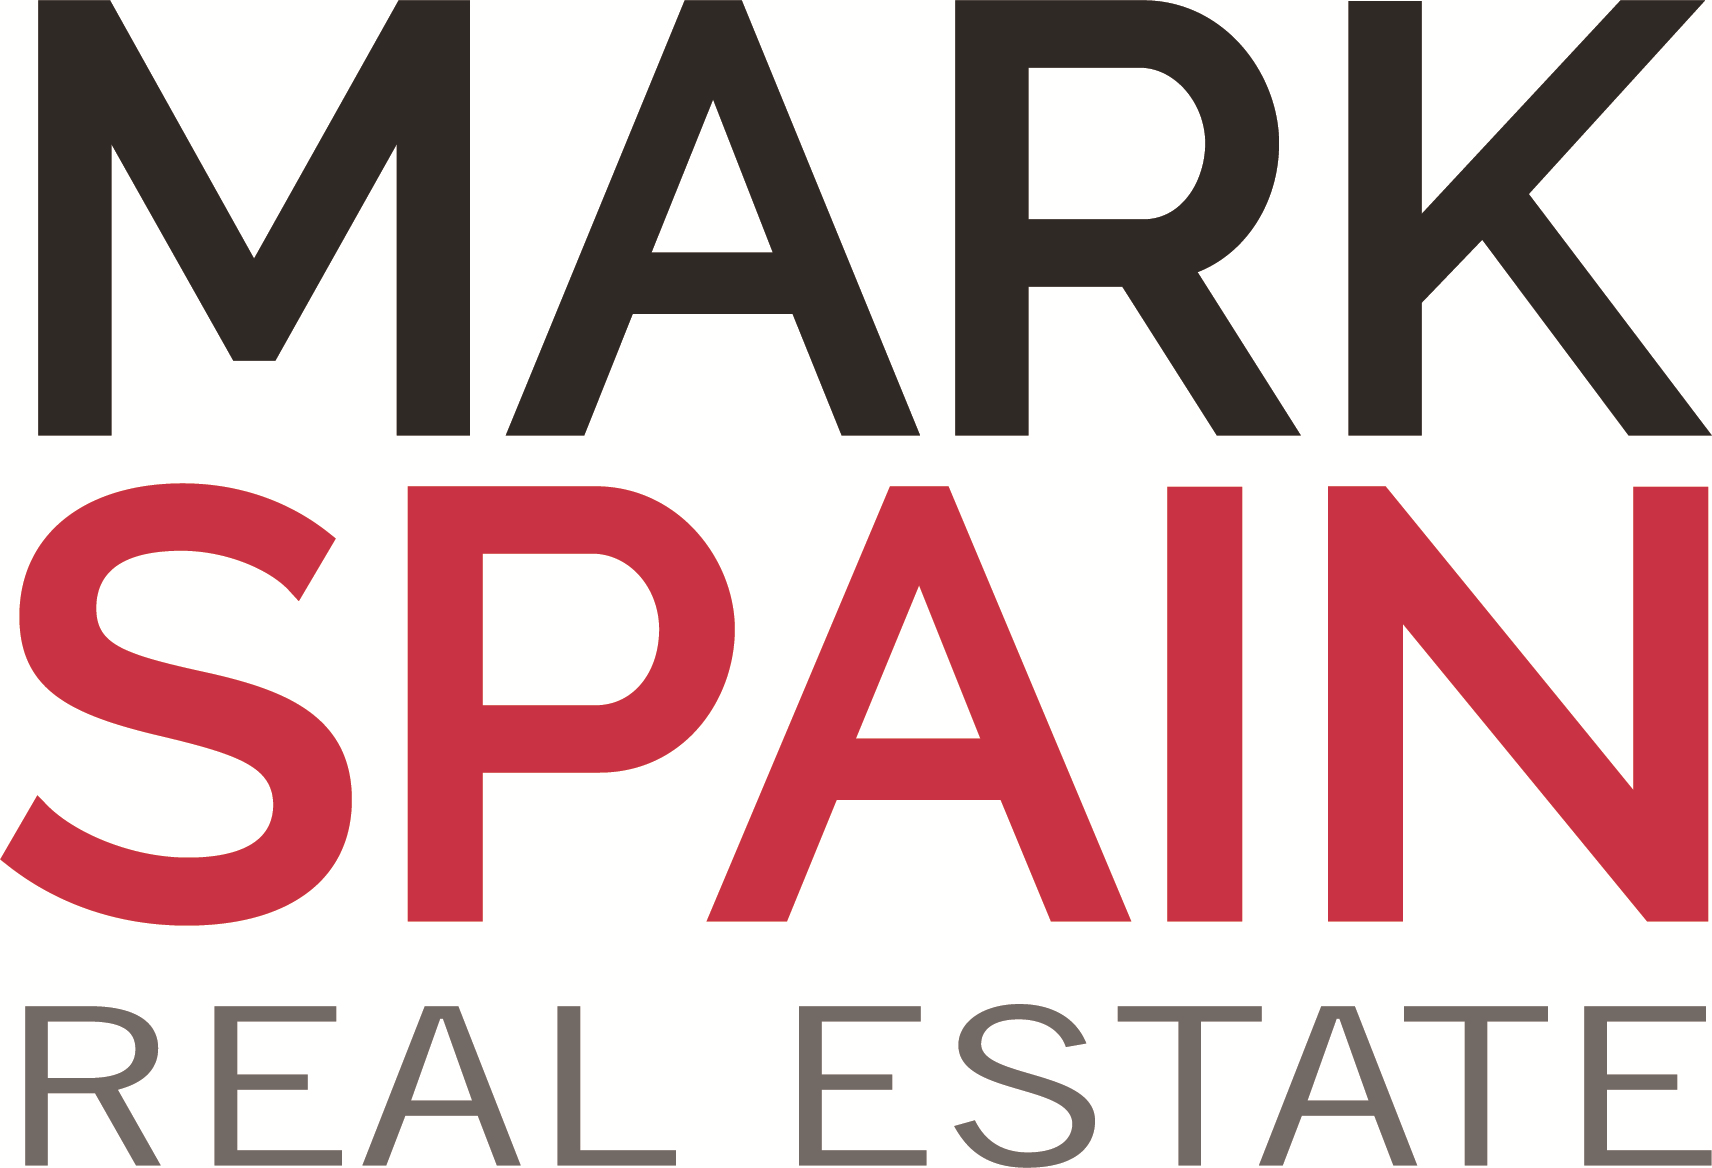 Mark Spain Real Estate logo